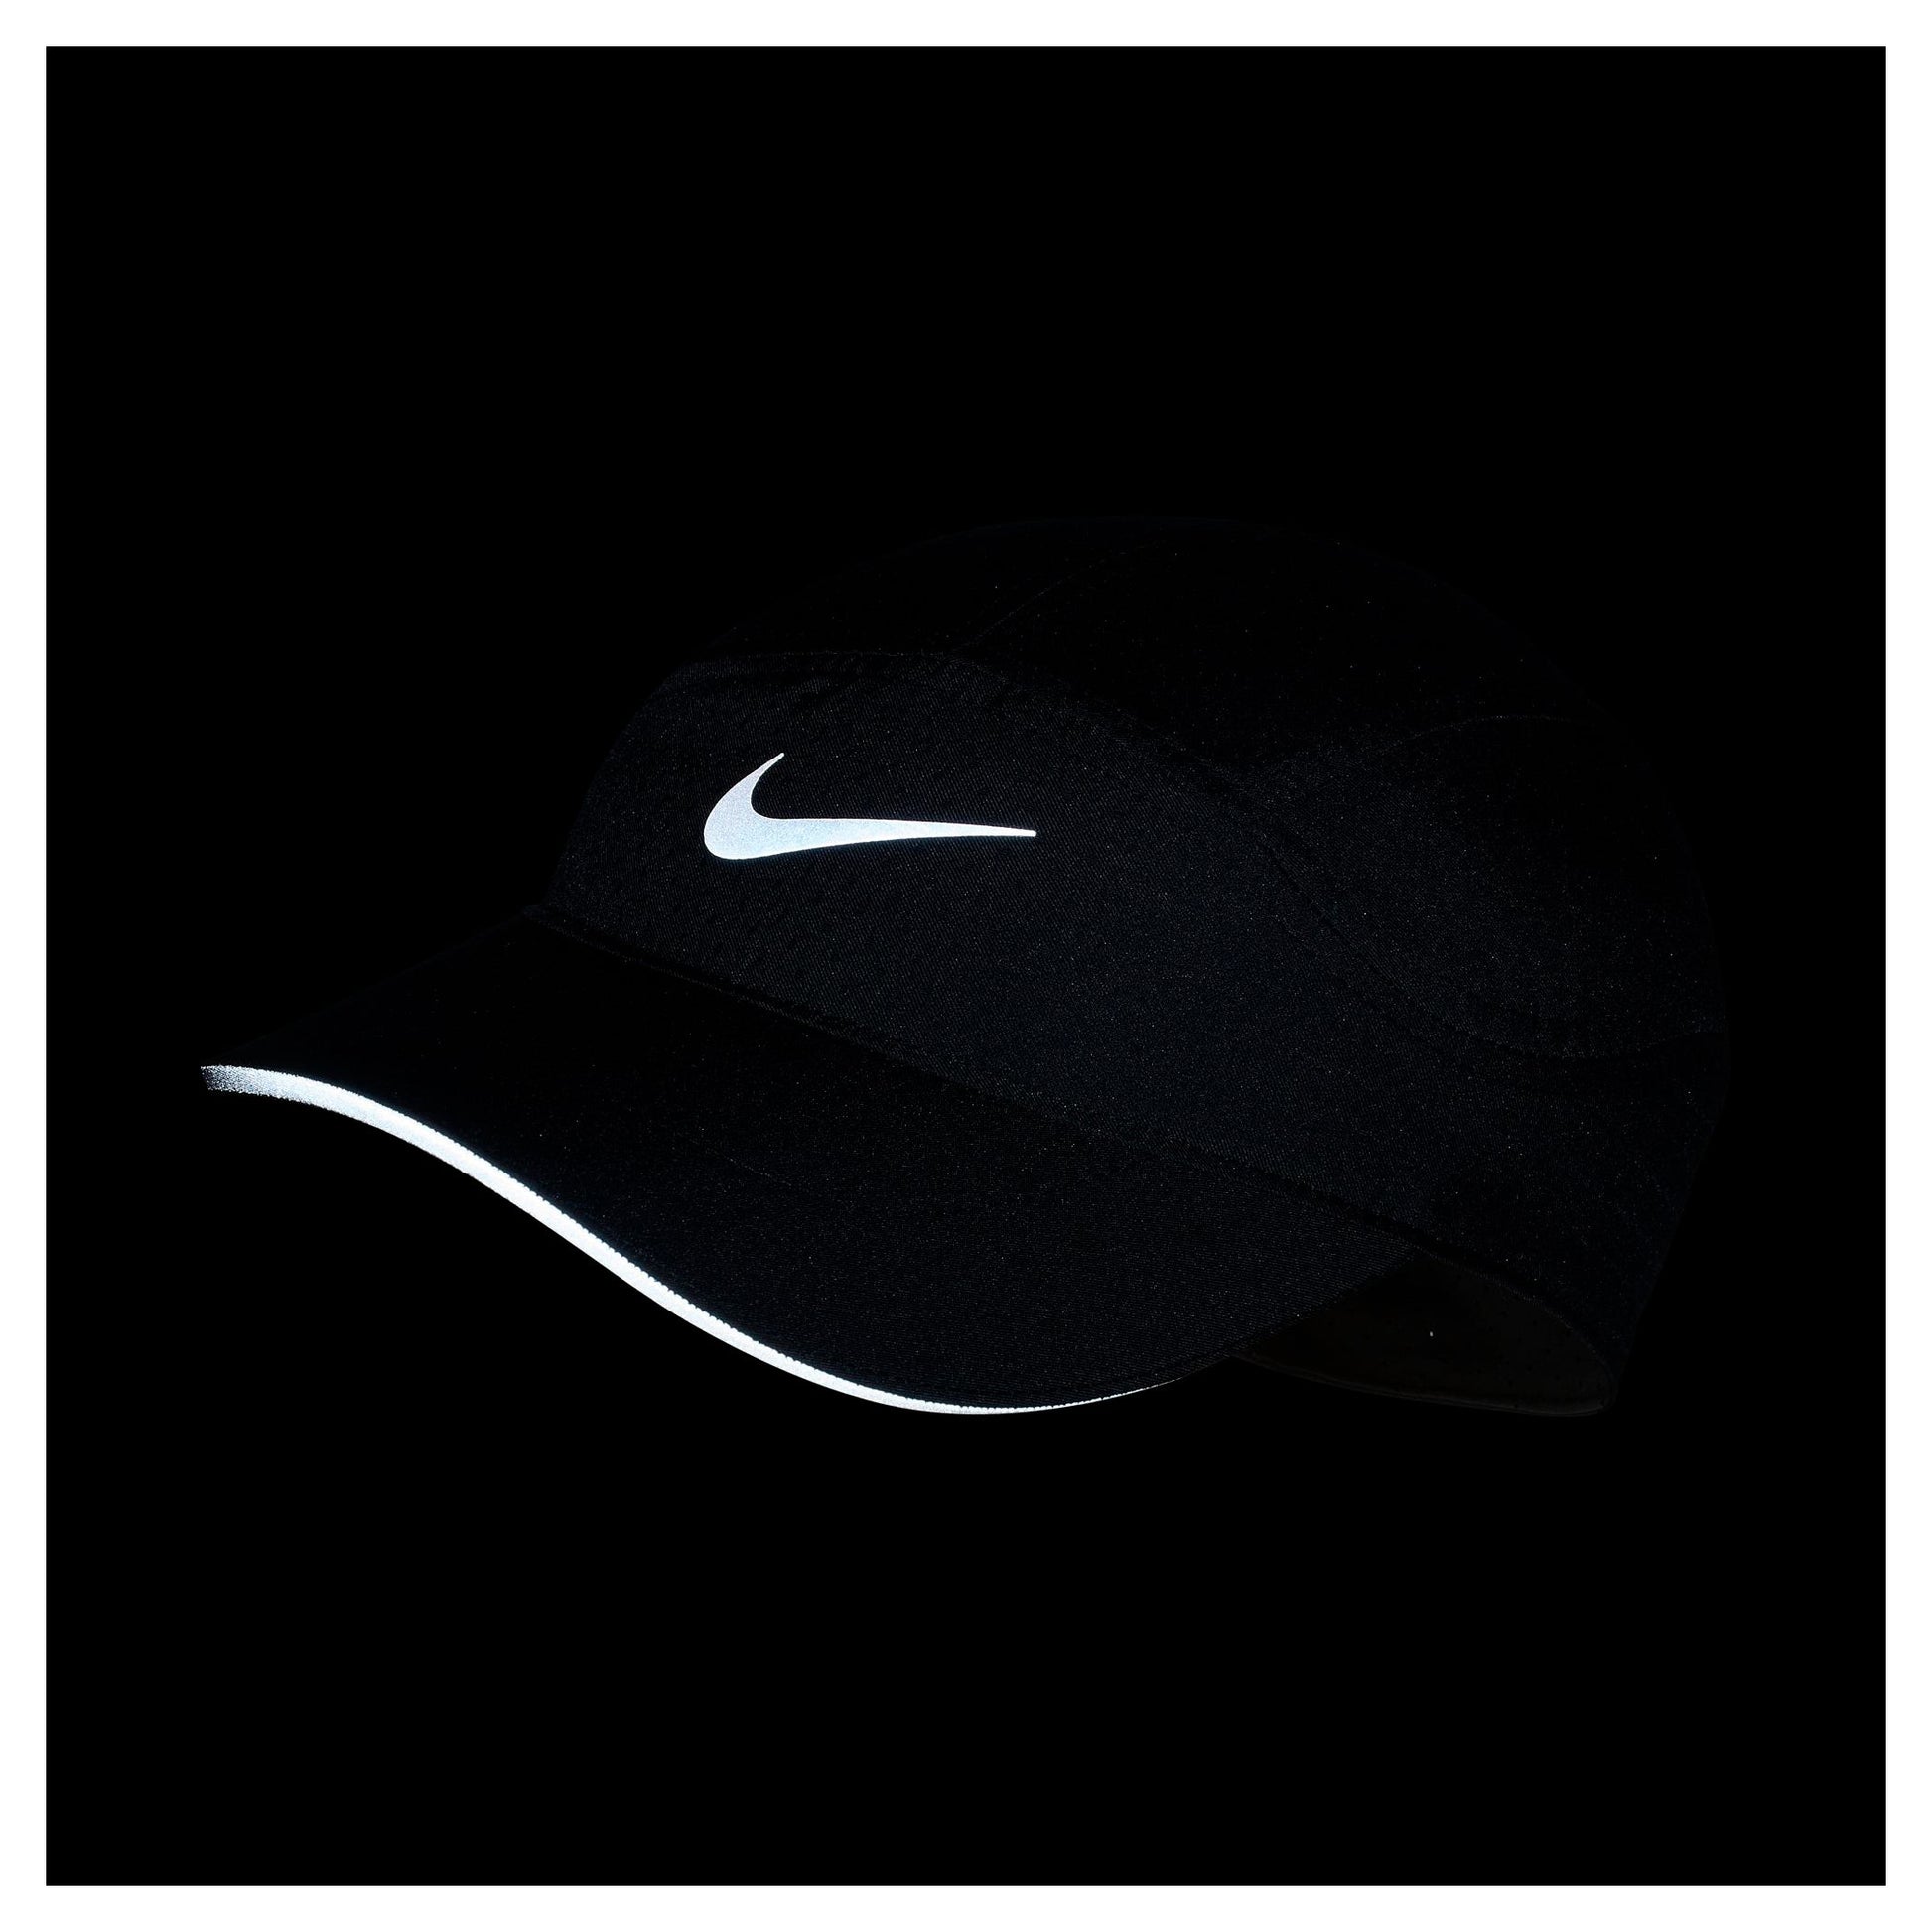 Nike aerobill featherlight cap, Men's Fashion, Watches